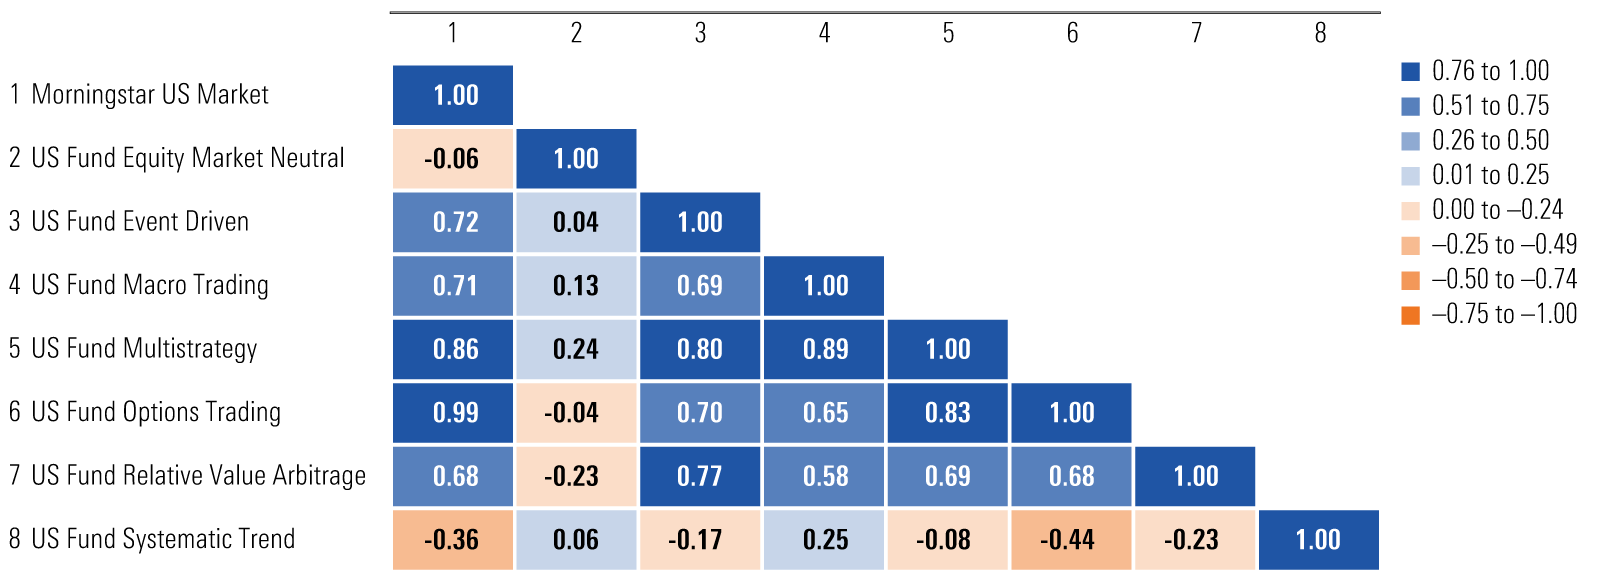 A three-year correlation matrix for alternative categories.